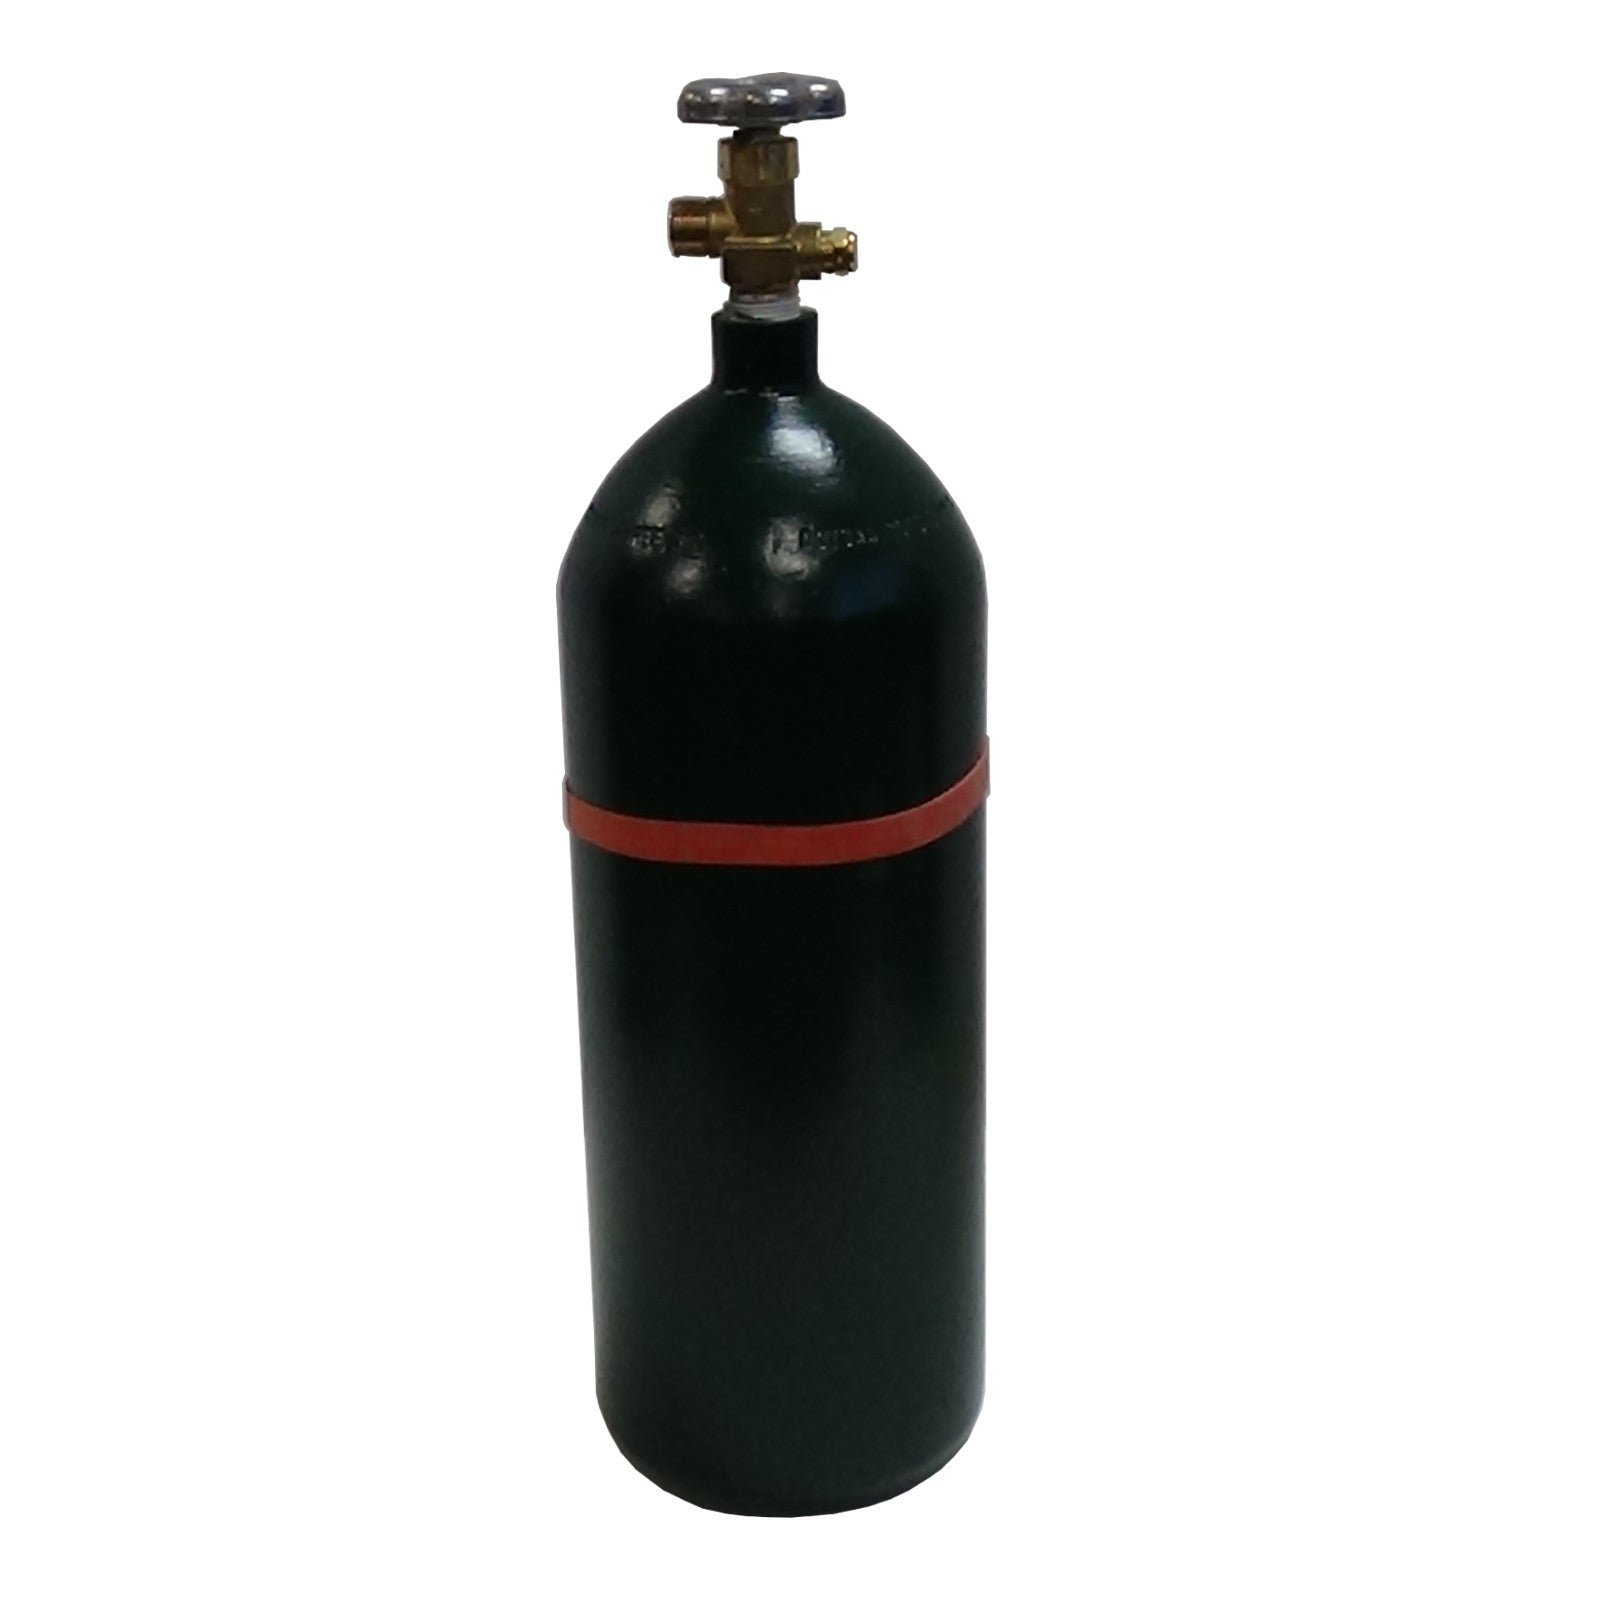 20 CF Welding Cylinder for Oxygen